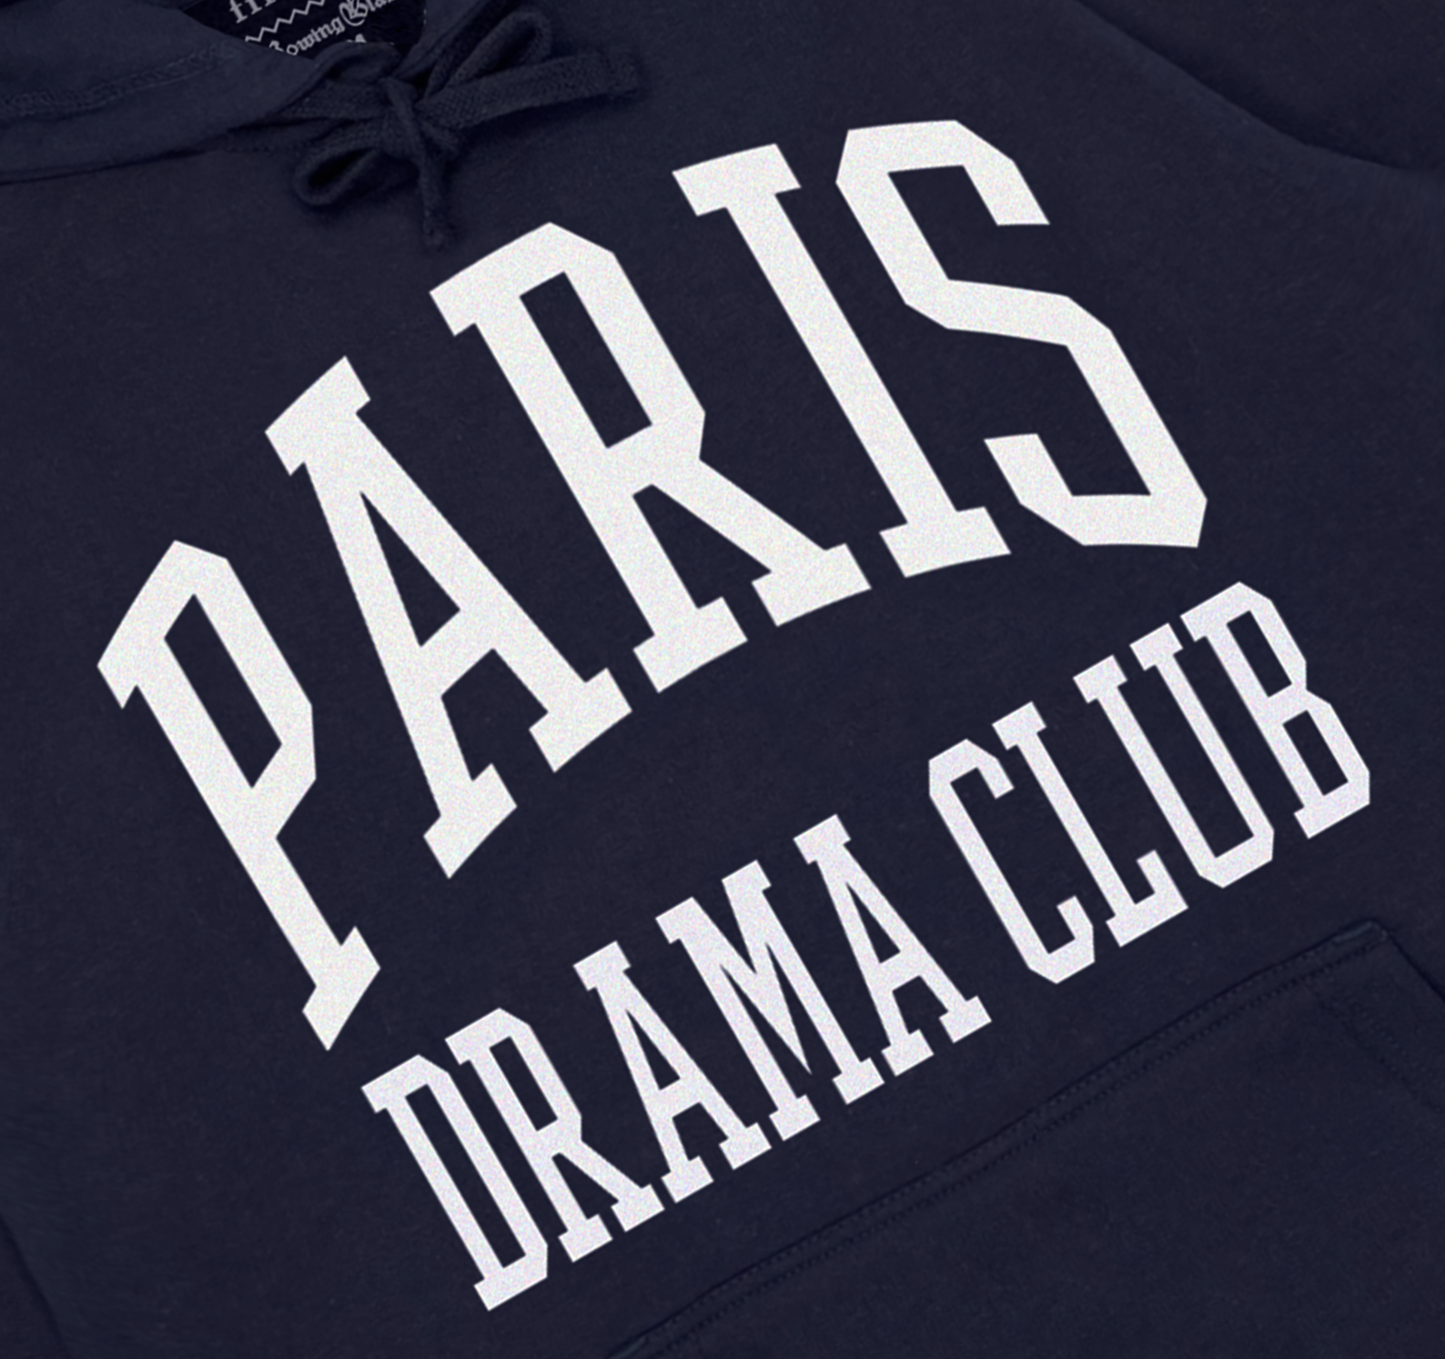 Paris Drama Club Hoodie